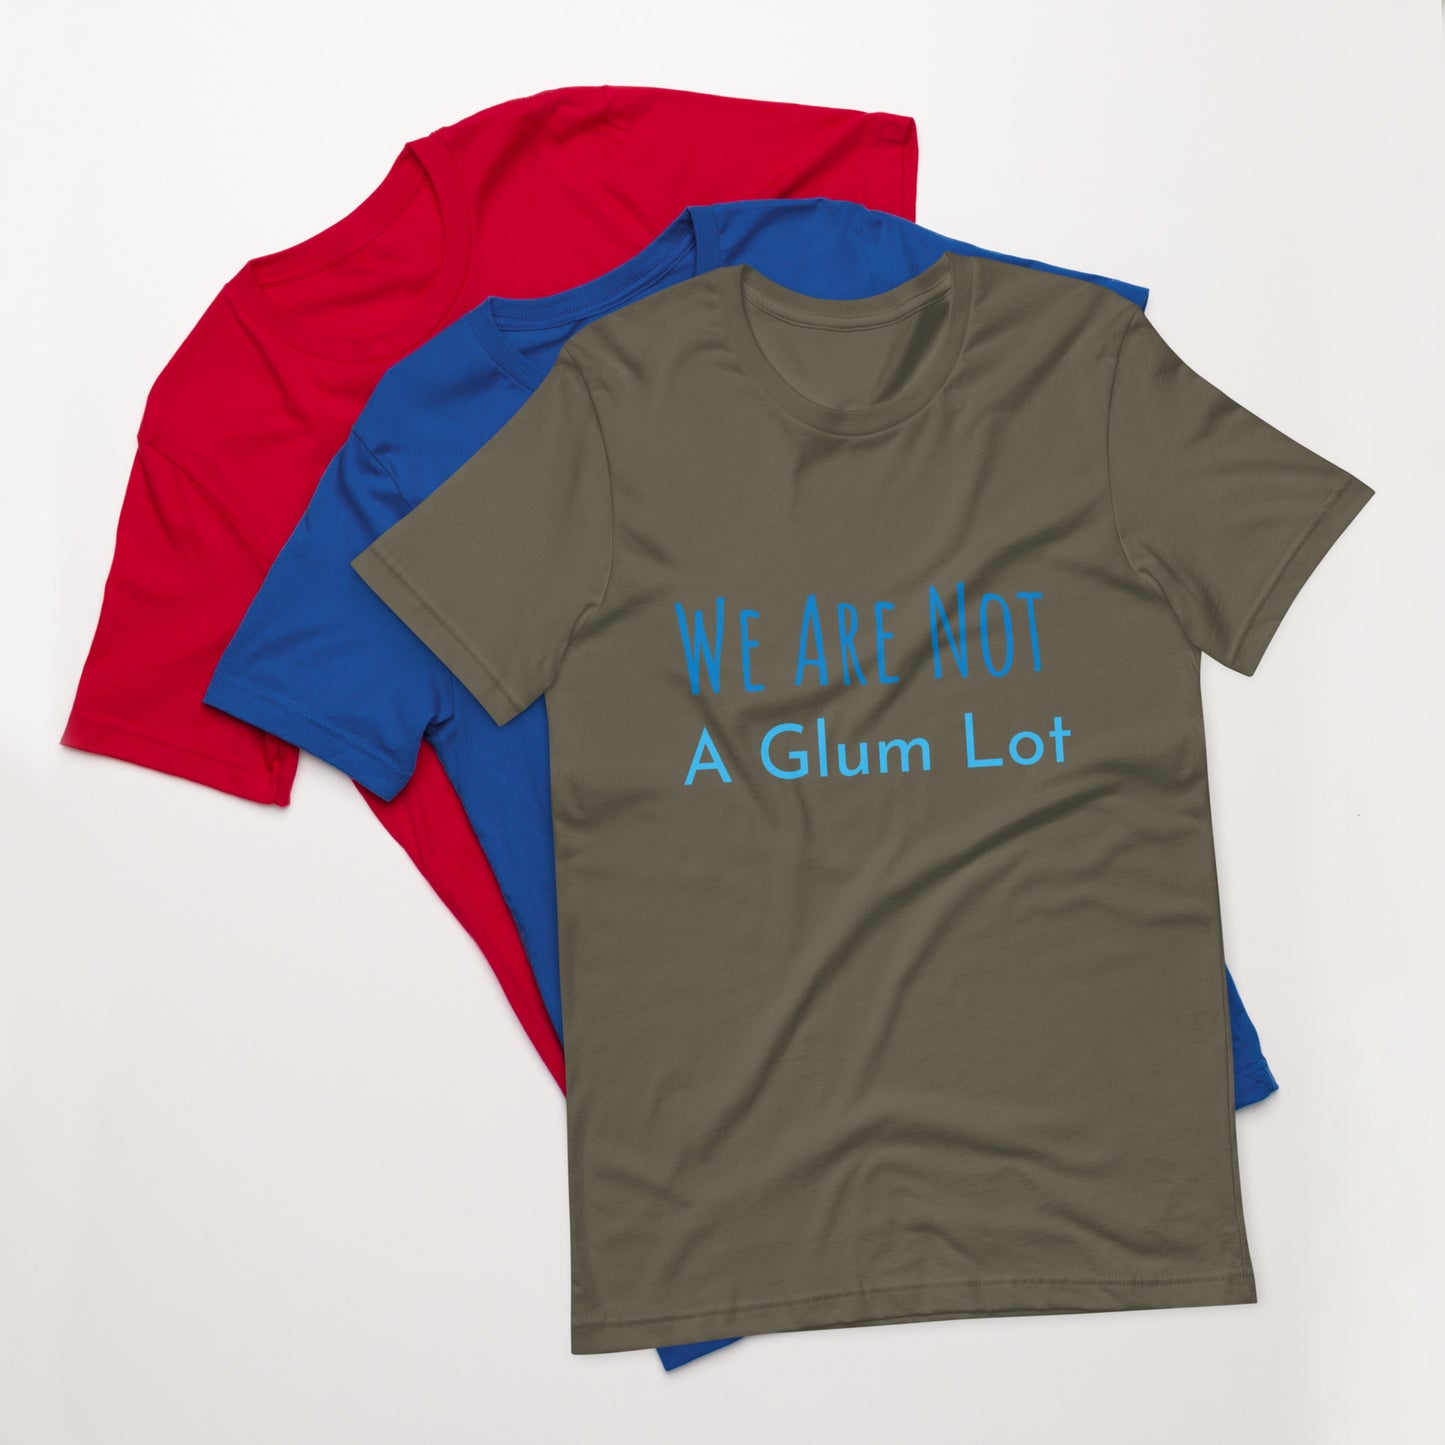 We Are Not A Glum Lot Unisex T-Shirt